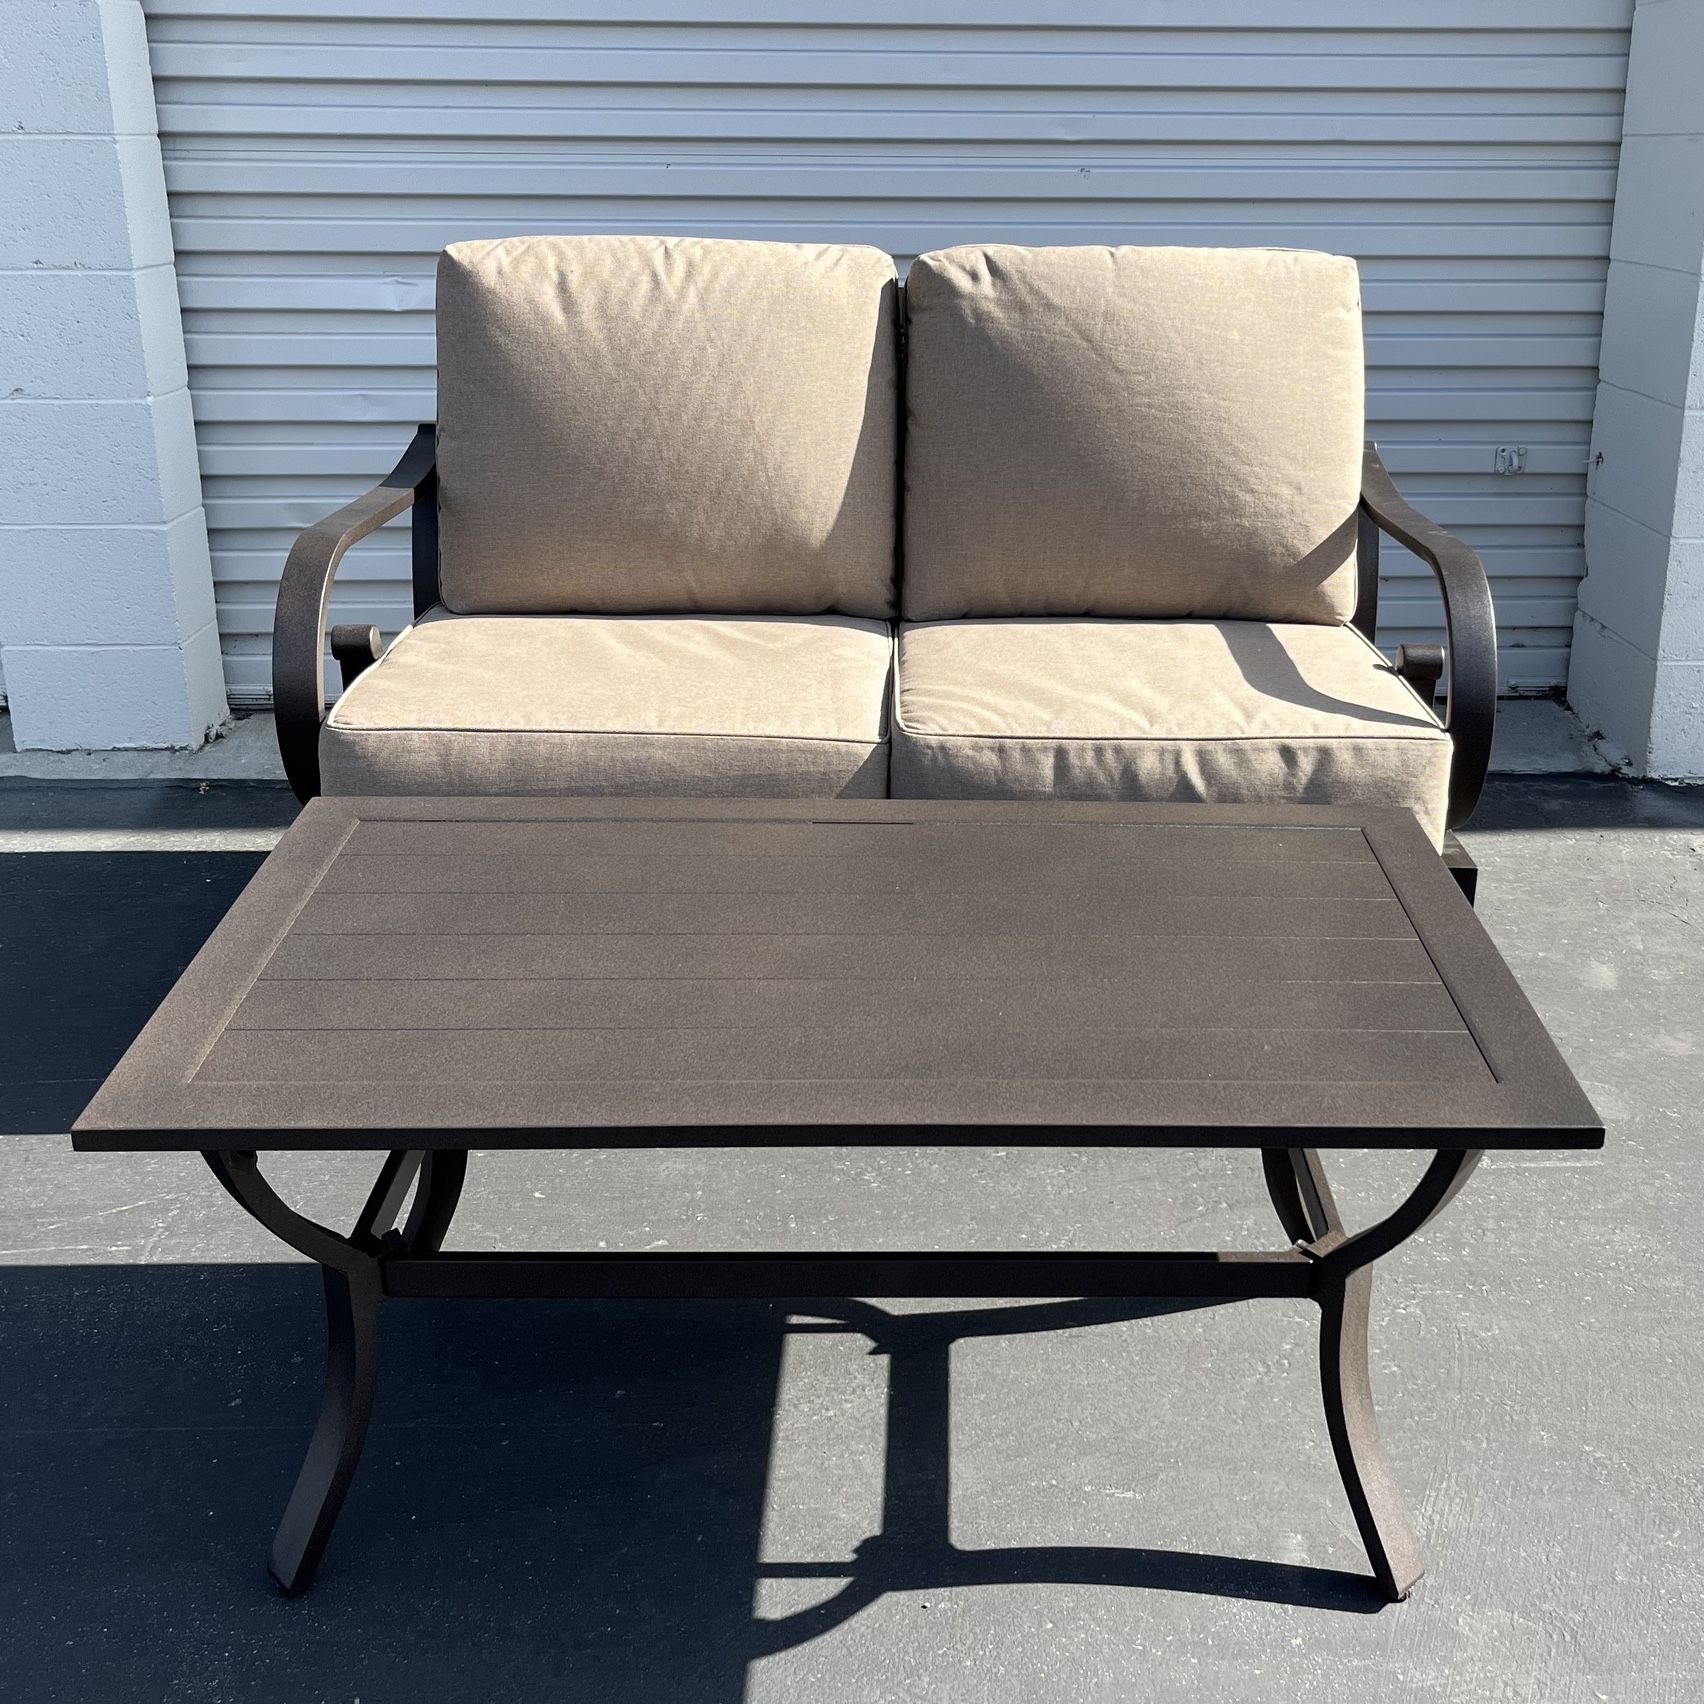 2 pcs Aluminum Patio Deep Seating Set with Tan Cushions